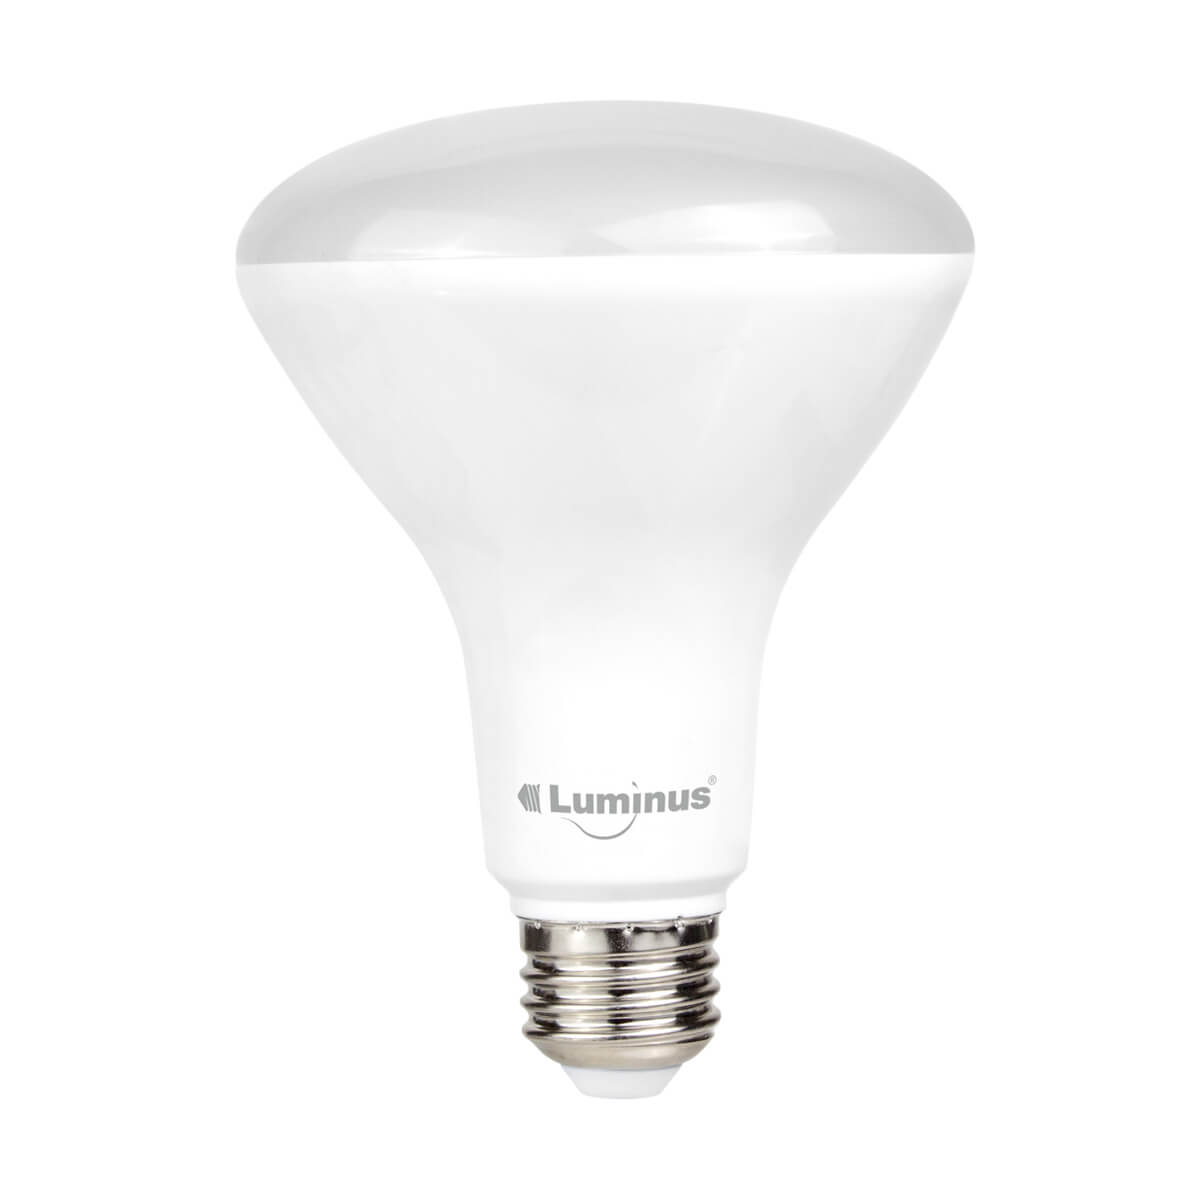 Luminus G5 LED 11W BR30 5000K